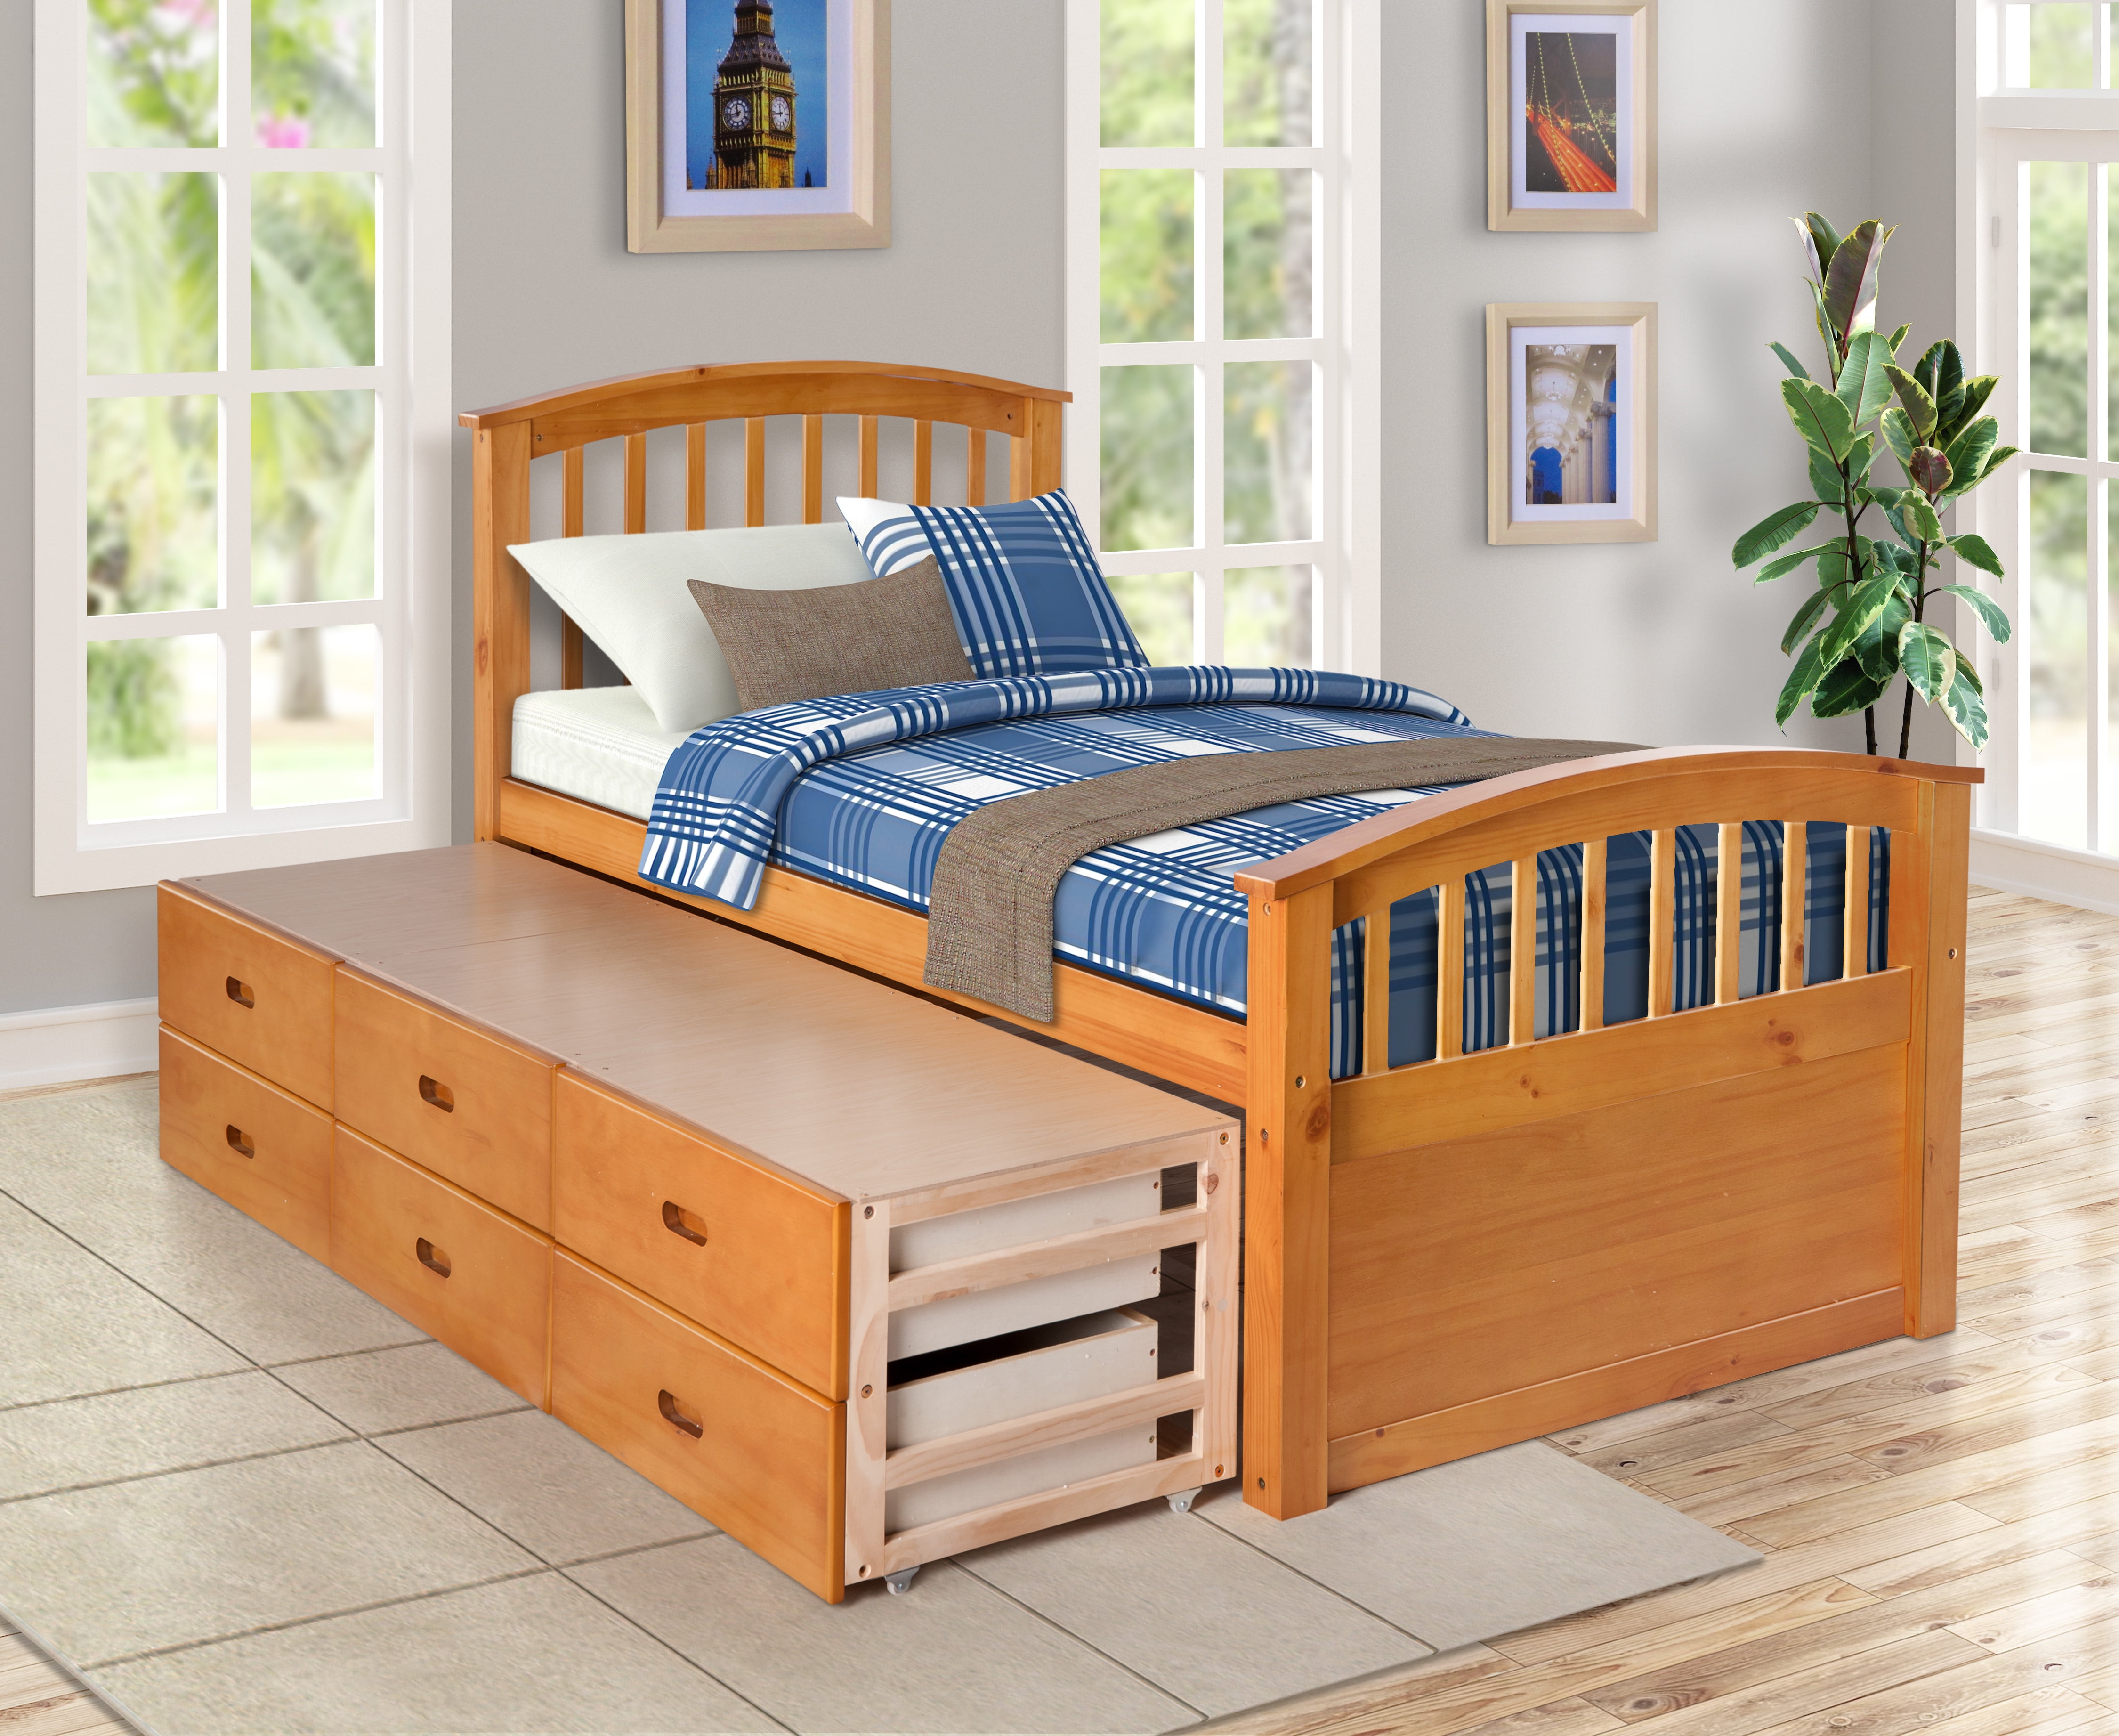 6-Drawer Storage Bed, BYMWAY Solid Wood Twin Size Platform Bed Storage